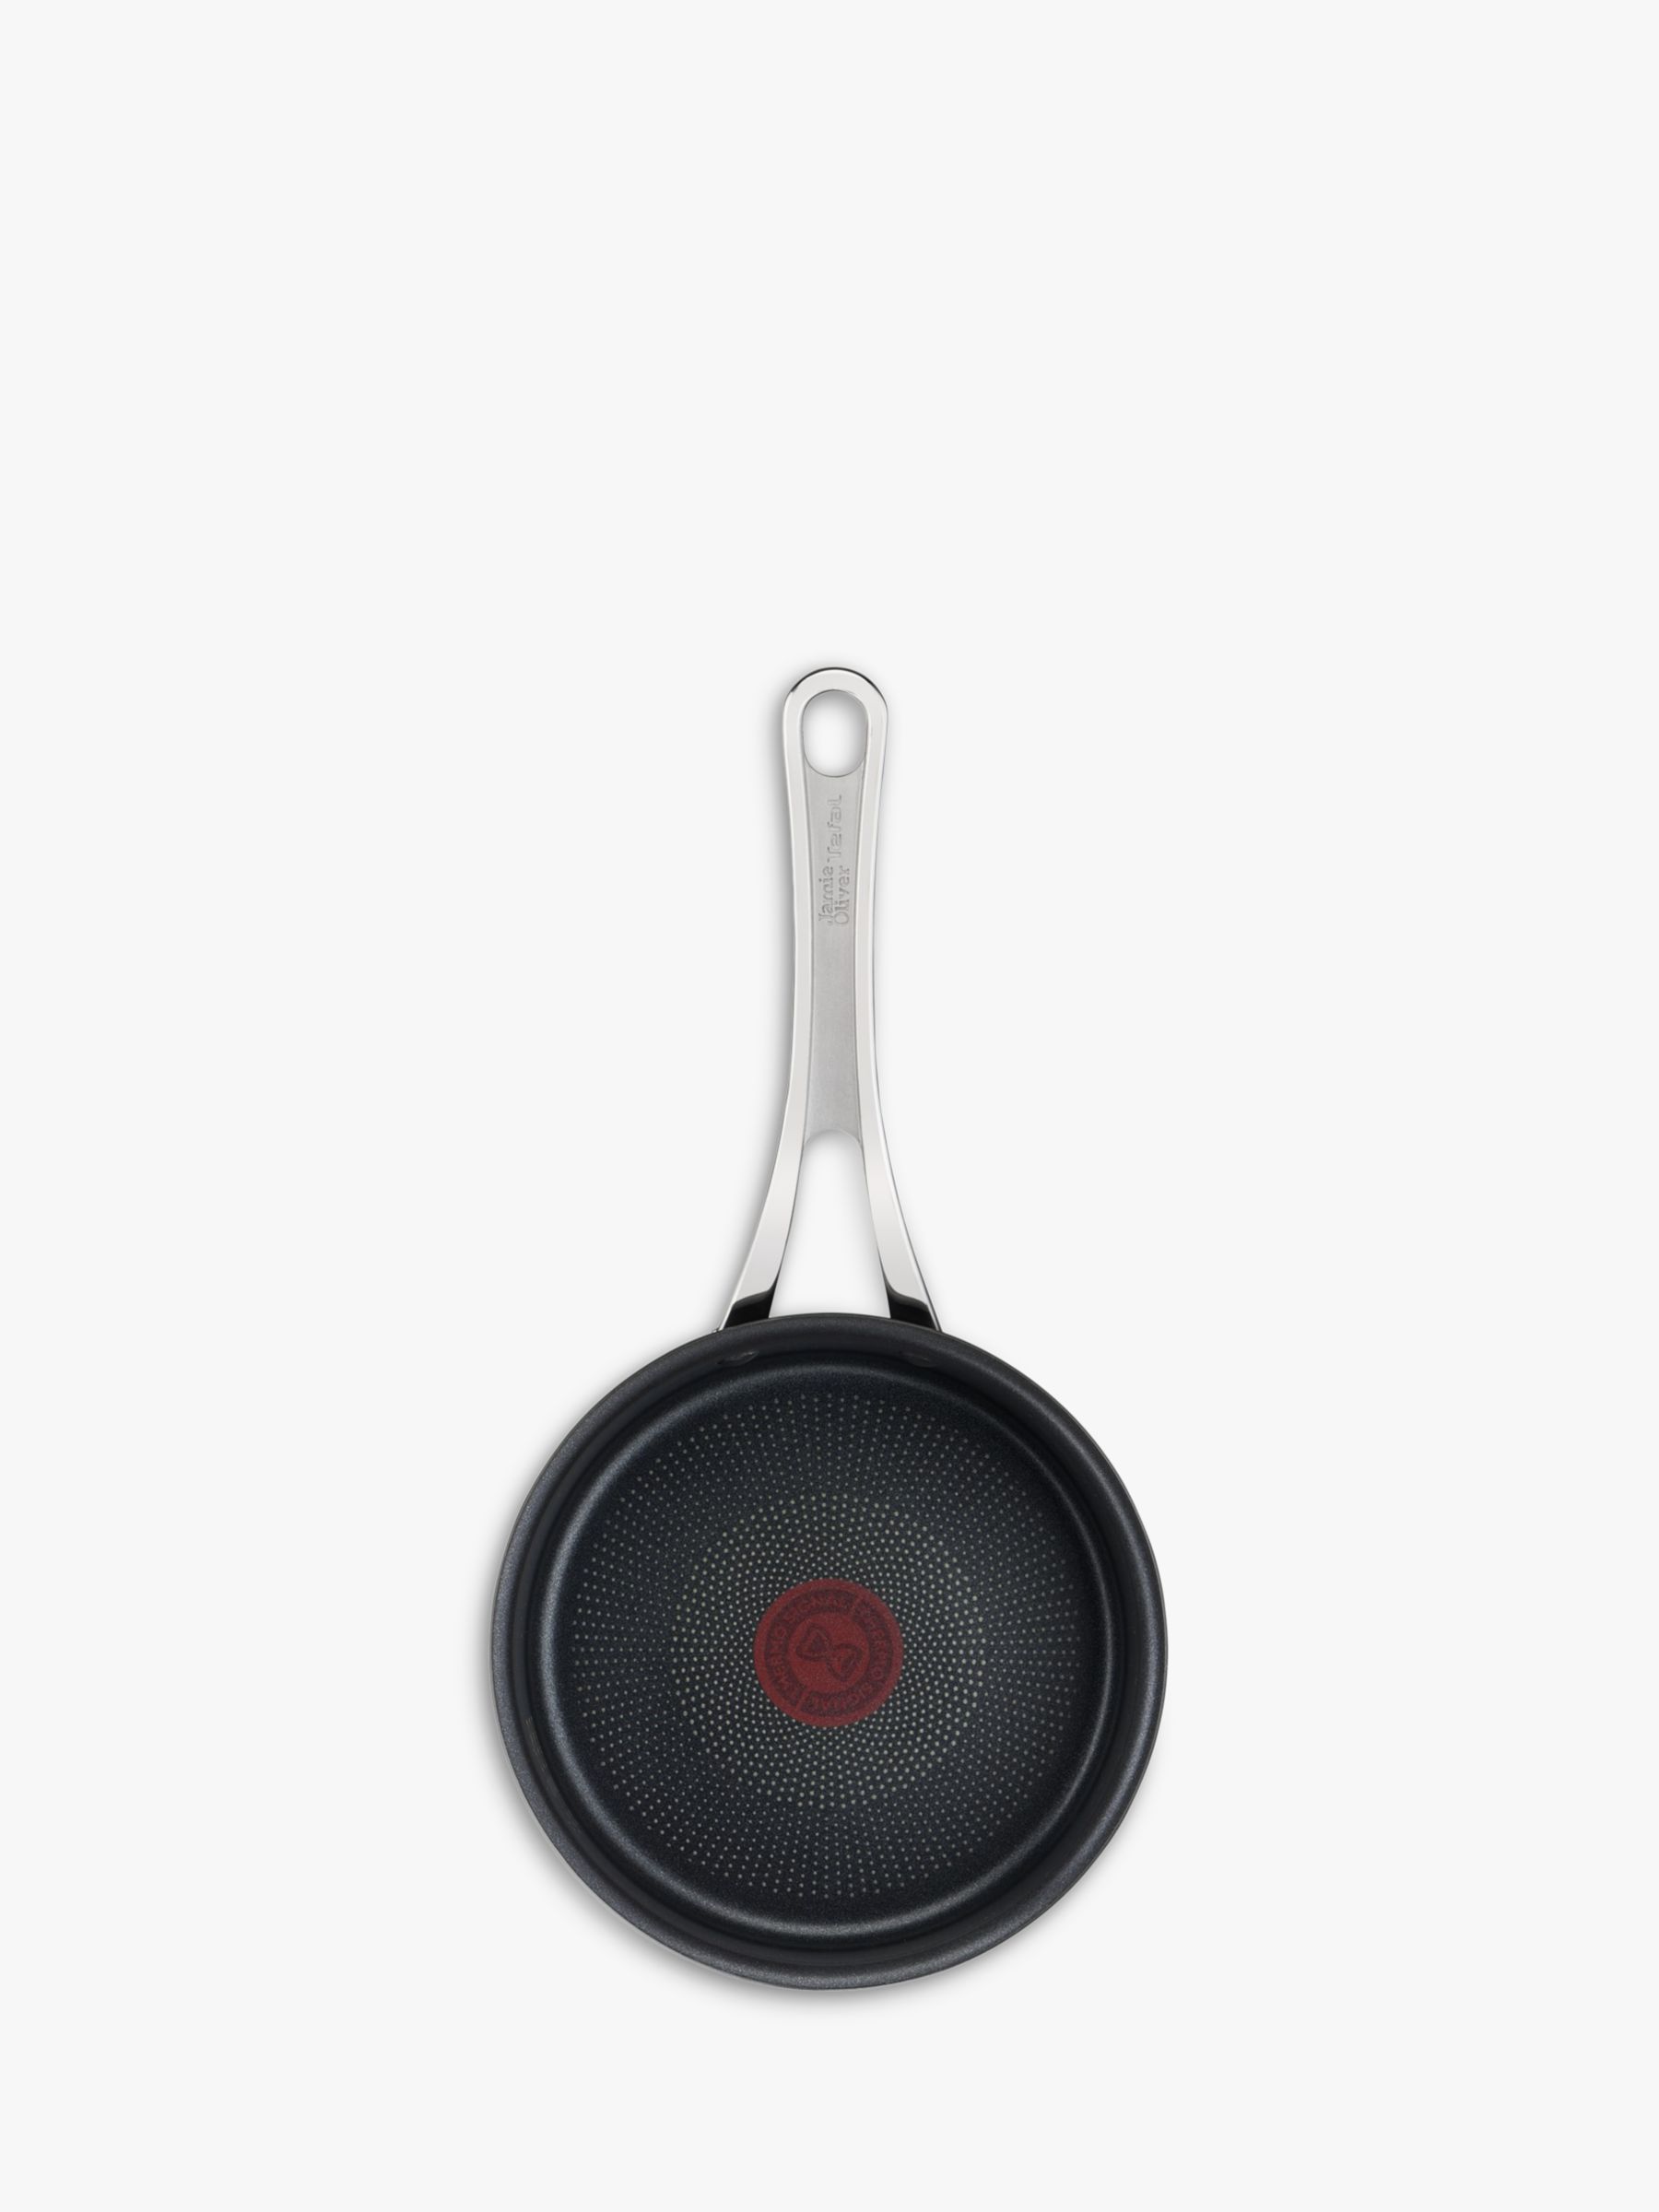 Tefal Jamie Oliver Cook's Cookware Set 8 pcs Instructions